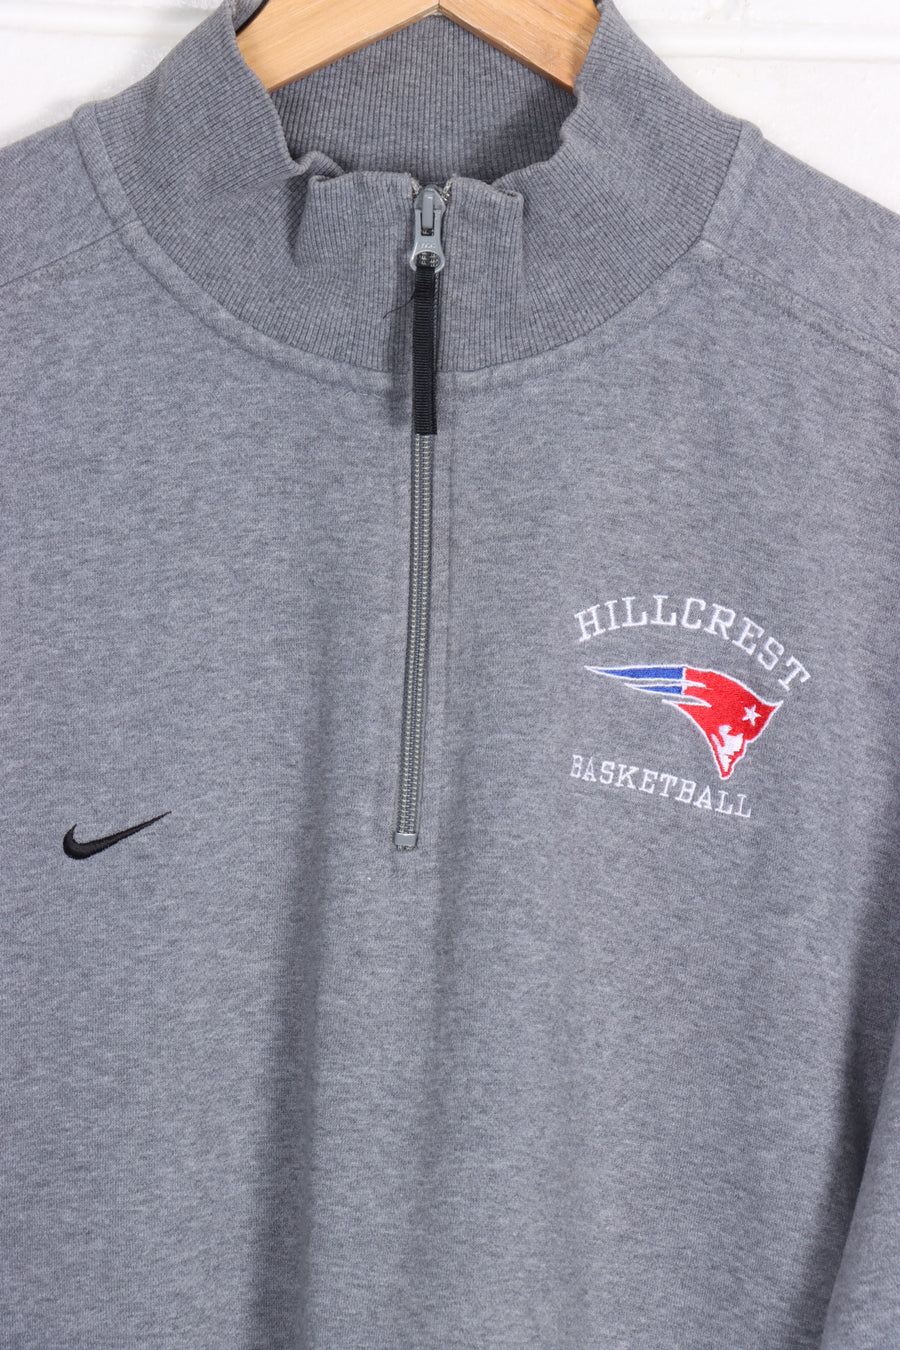 NIKE Hillcrest Basketball Swoosh Logo Embroidered 1/4 Zip Sweatshirt (XXL)